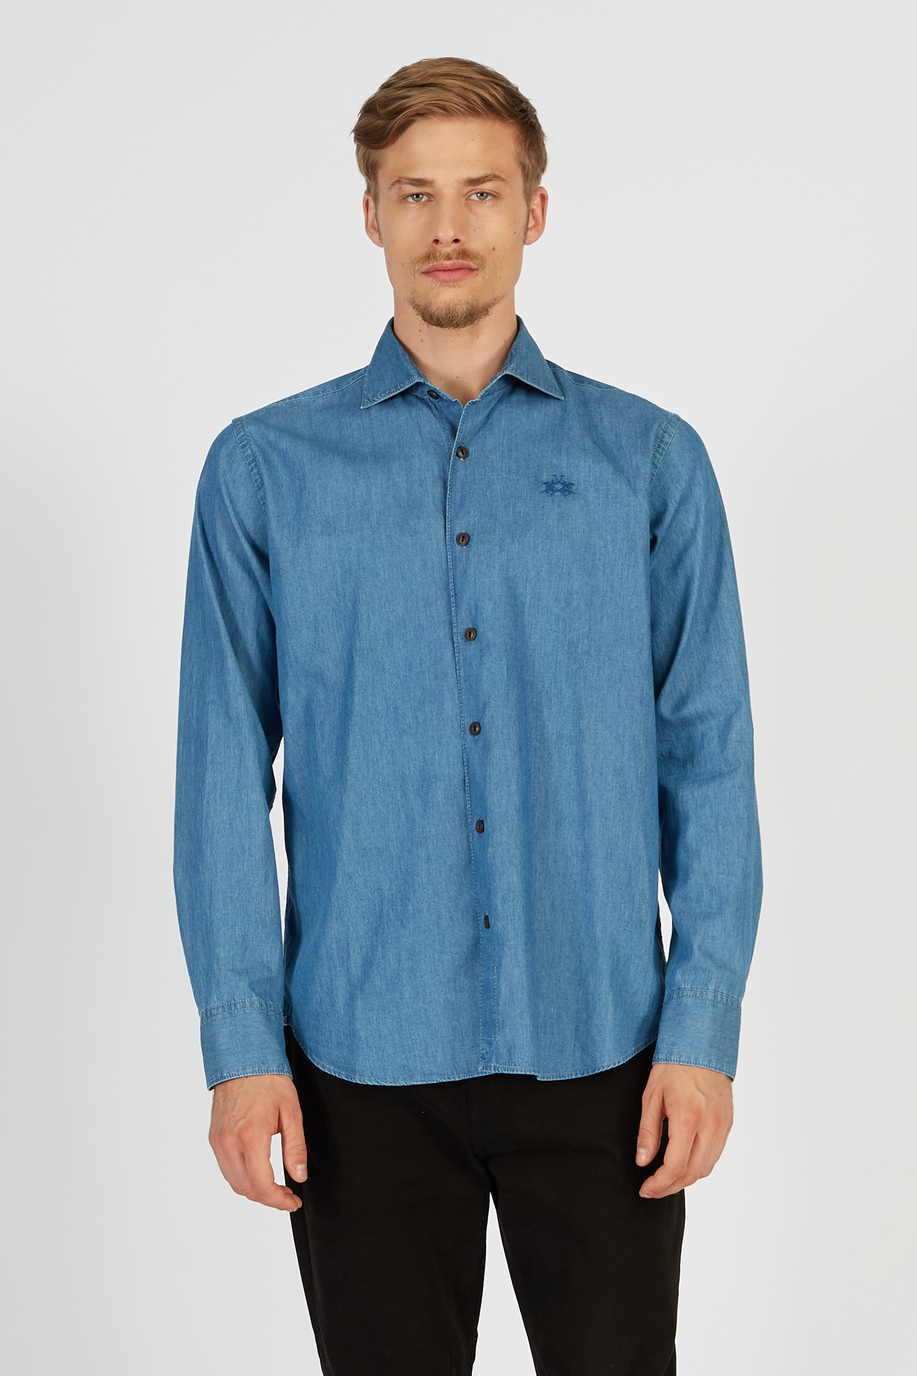 Men’s Timeless denim shirt with regular fit long sleeves - Shirts | La Martina - Official Online Shop